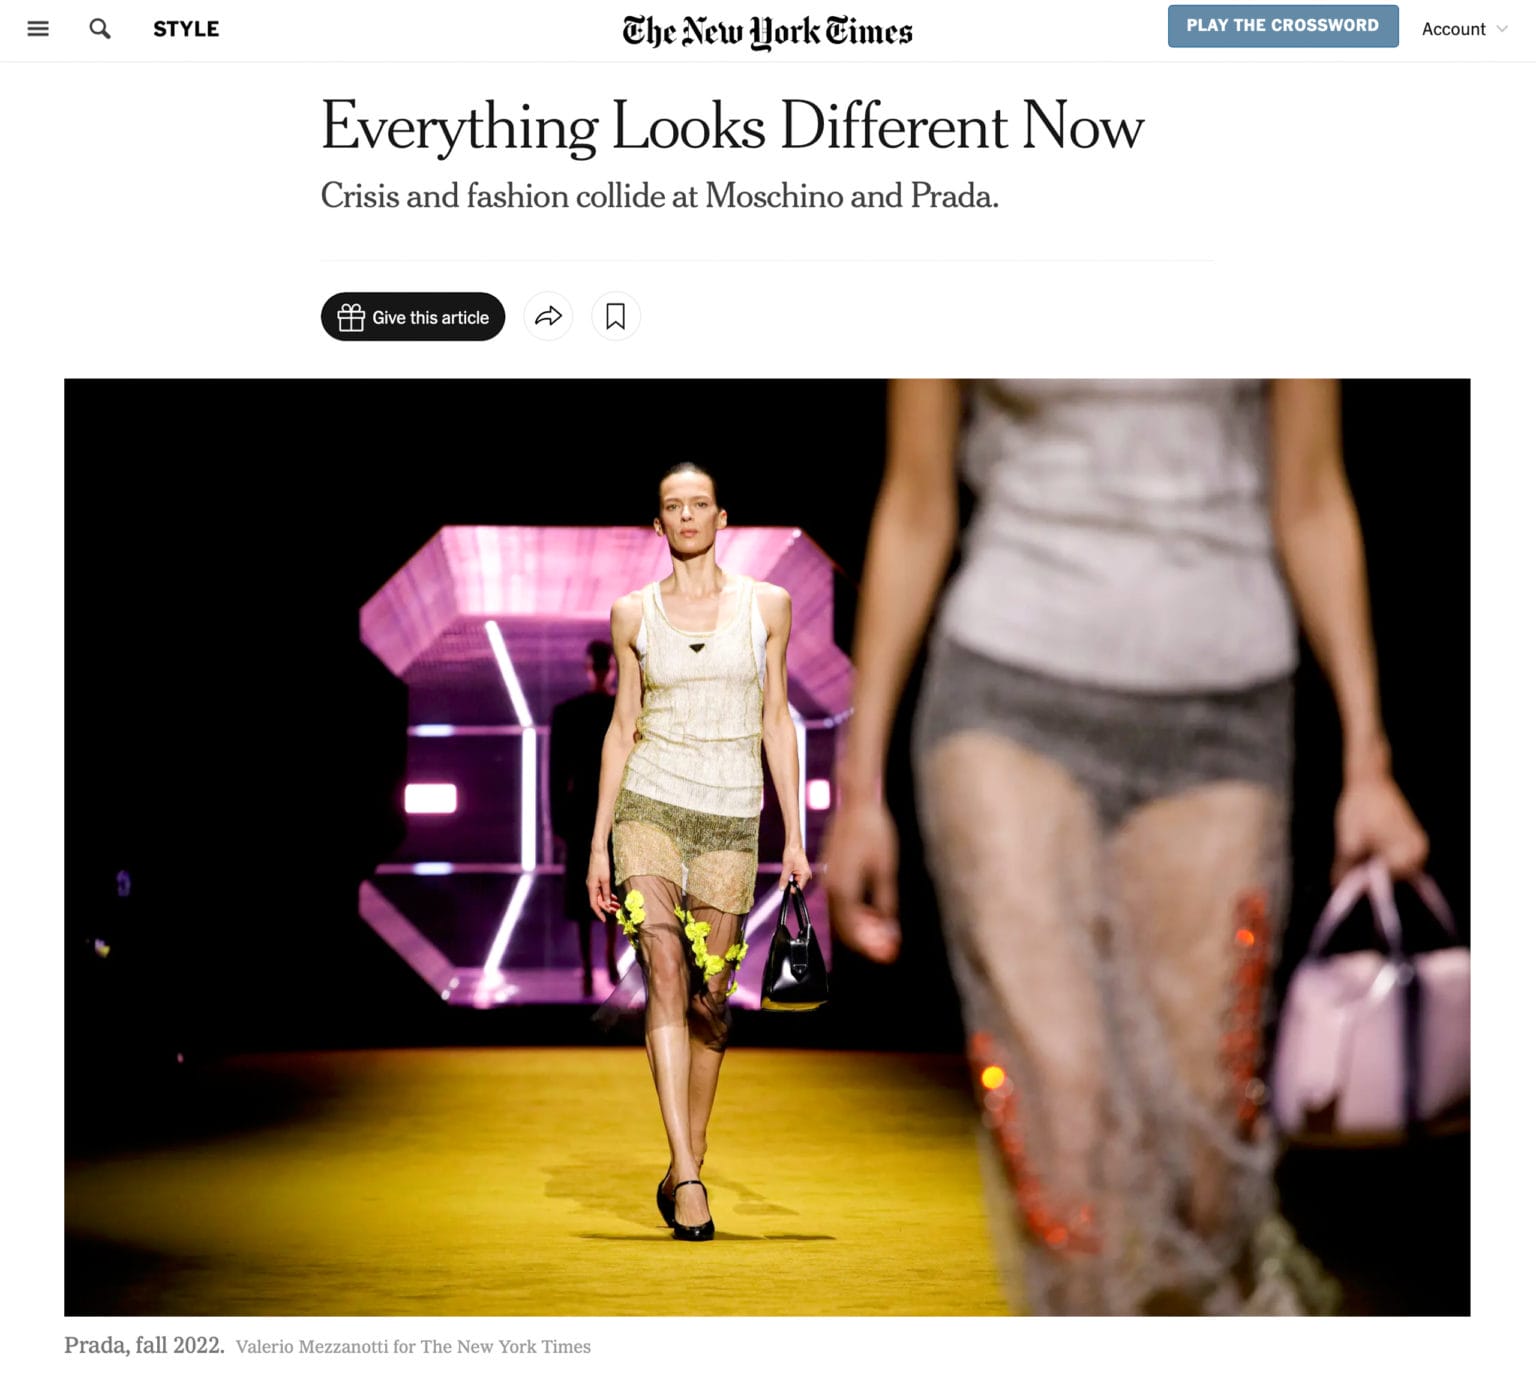 Prada Fashion Show, Photo by Valerio Mezzanotti for The New York Times